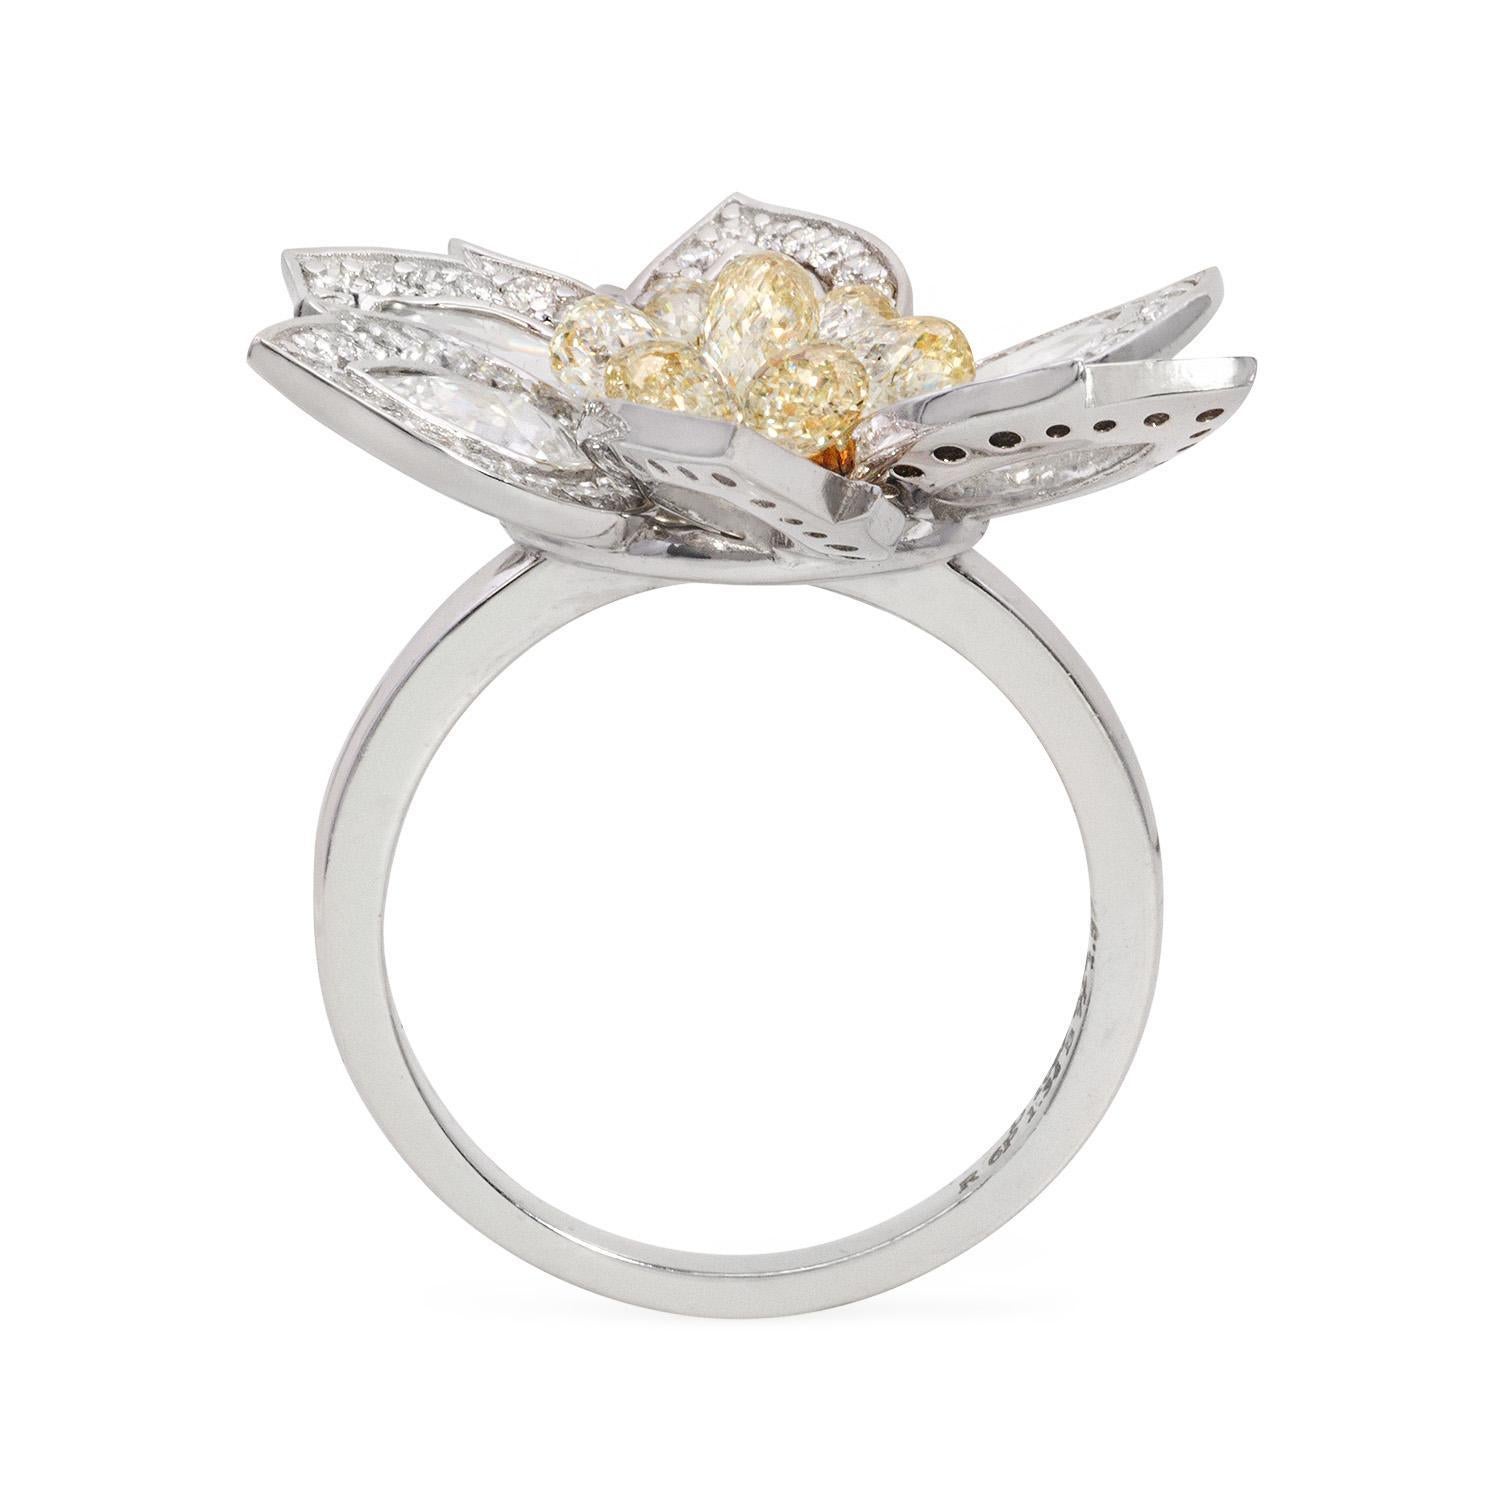 Modern 1.92 Carat Center Diamond and 1.34 Carat Briolette Diamond 18K Ring - The Daisy For Sale